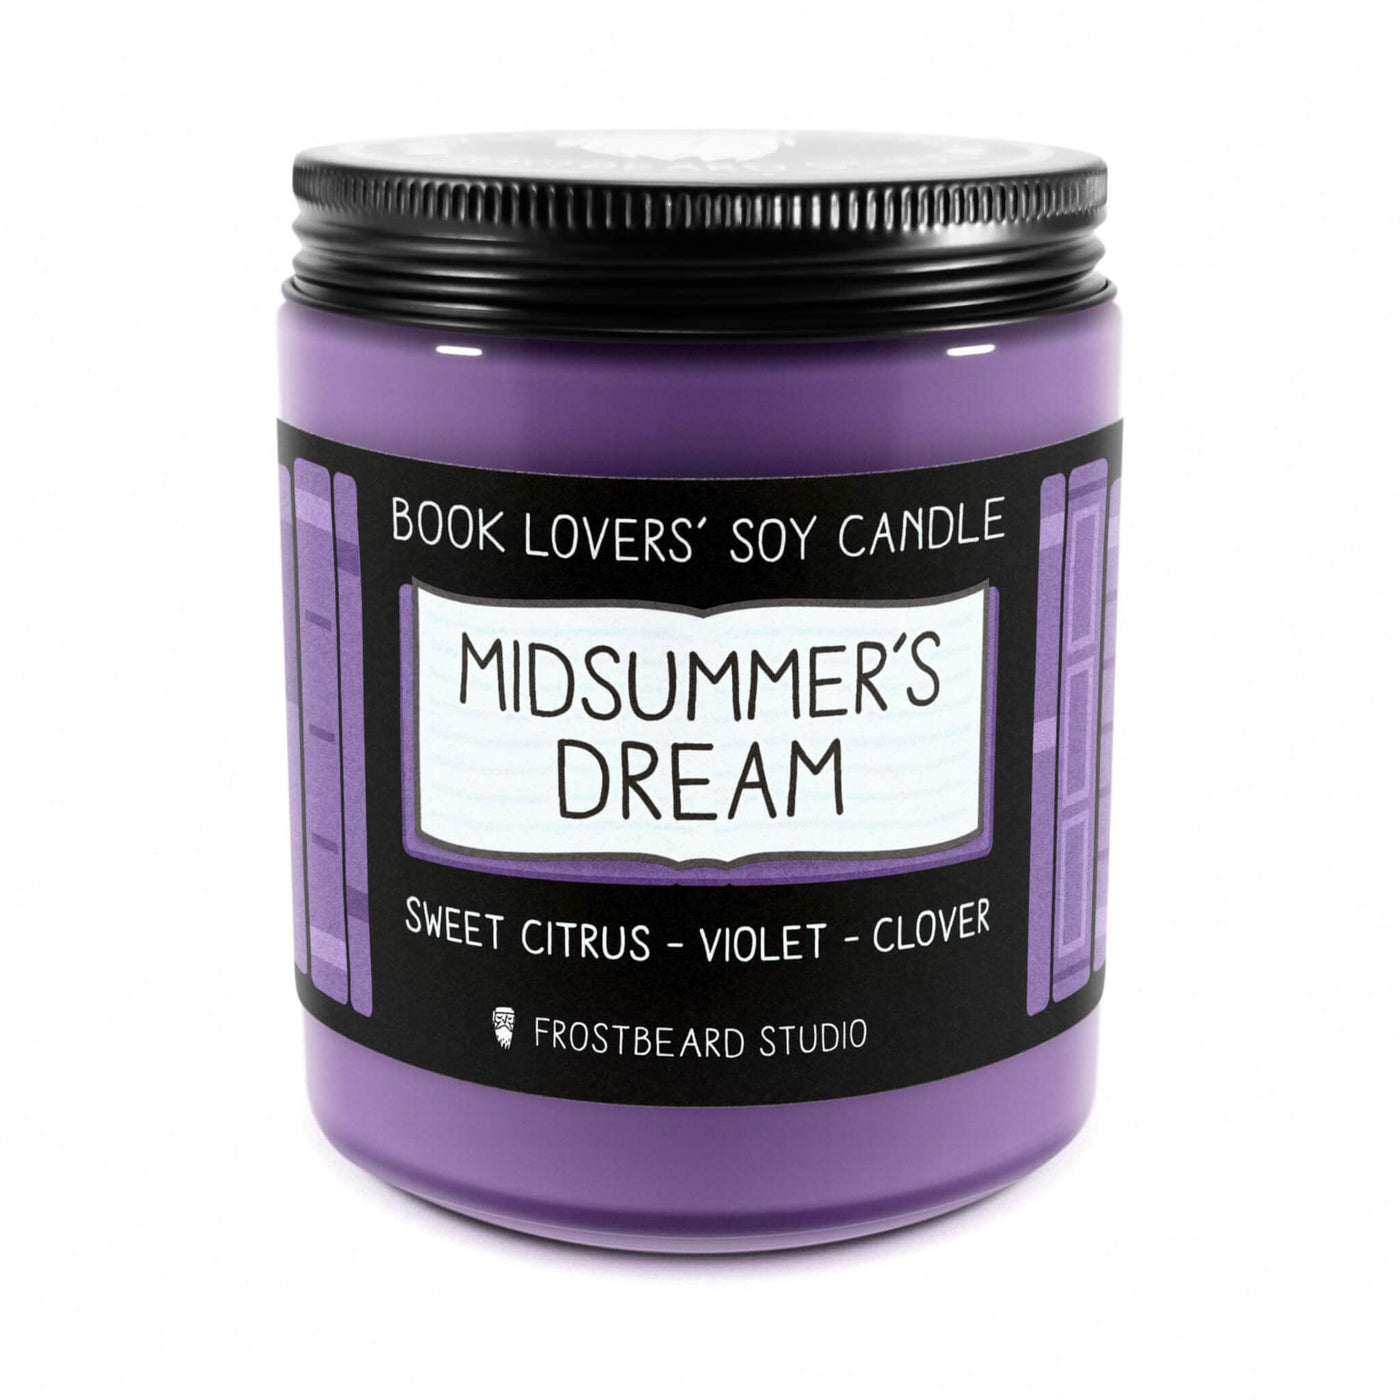 Midsummer's Dream  -  8 oz Jar  -  Book Lovers' Soy Candle  -  Frostbeard Studio